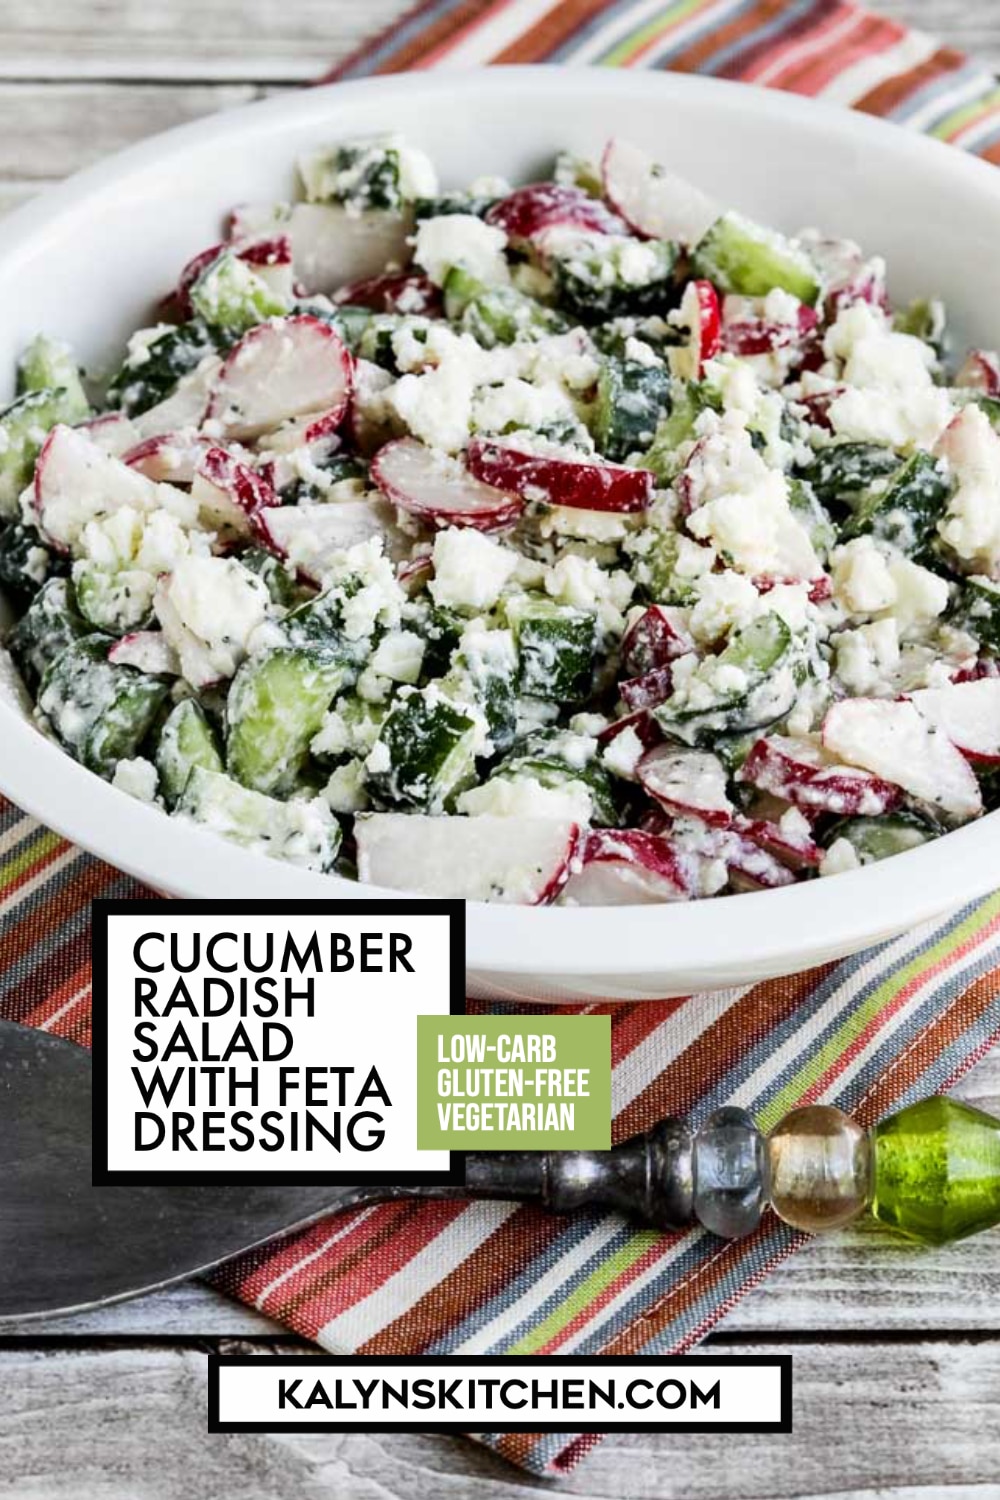 Pinterest image of Cucumber Radish Salad with Feta Dressing